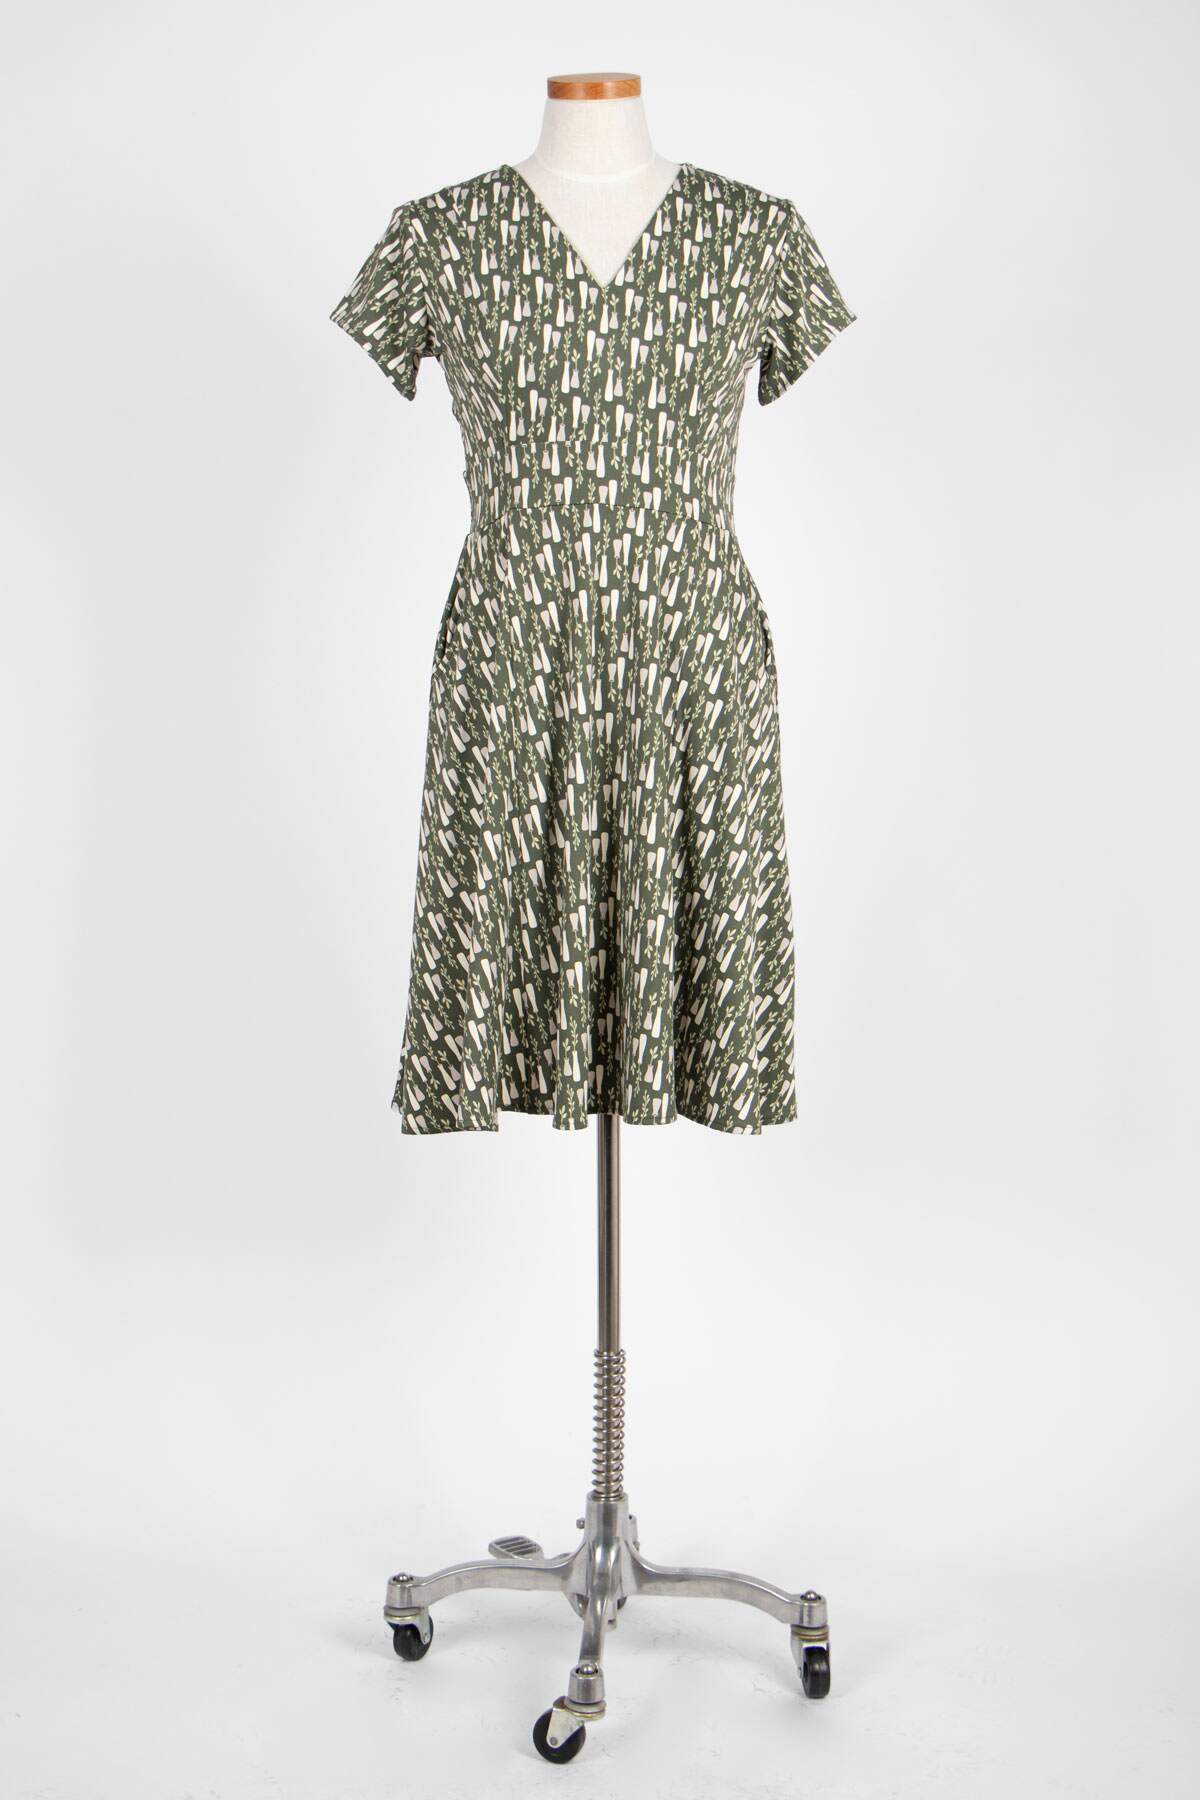 Cece Dress in Sage Sprigs by Karina Dresses